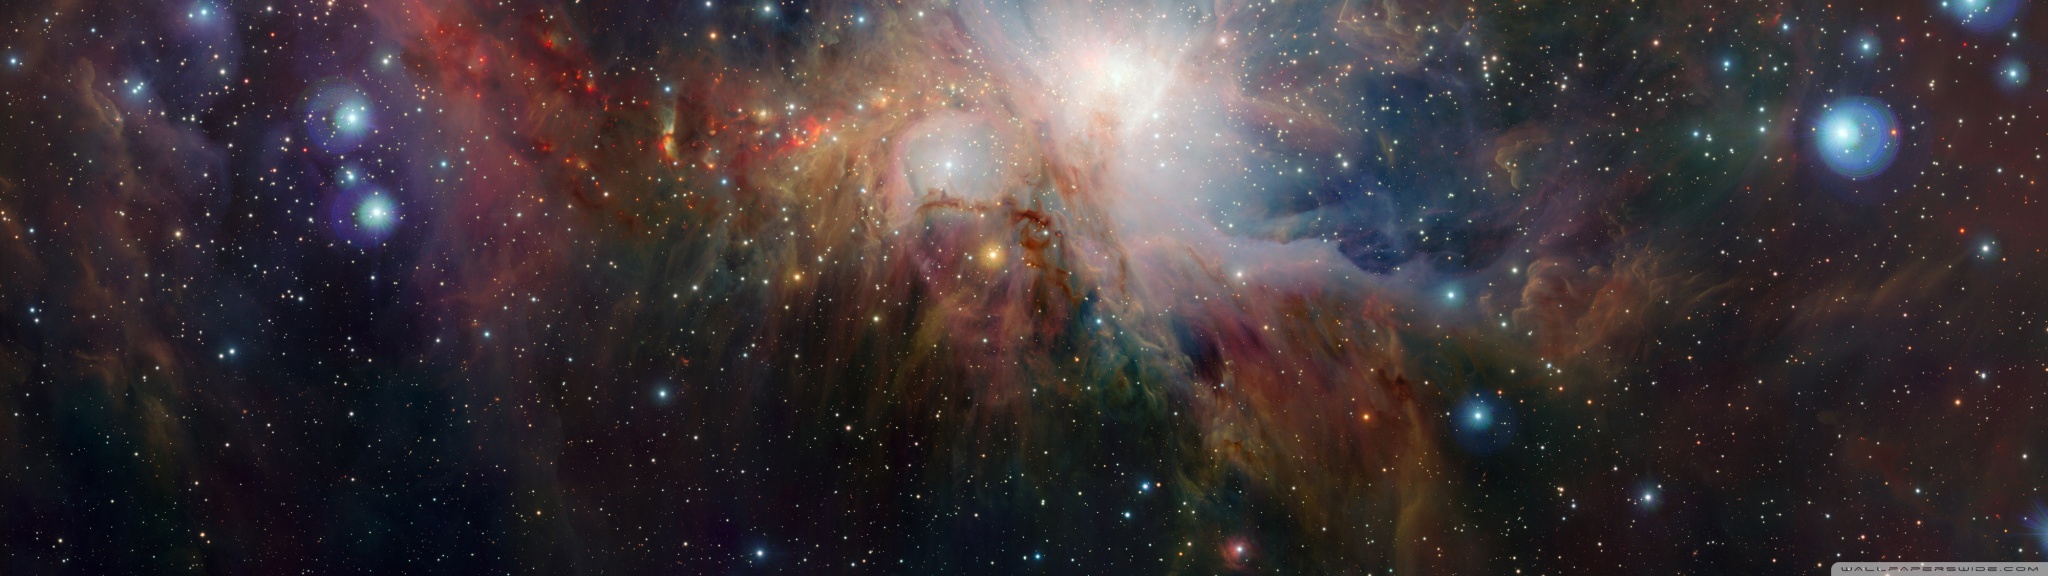 Orion Nebula Ultra HD Desktop Background Wallpaper For Multi